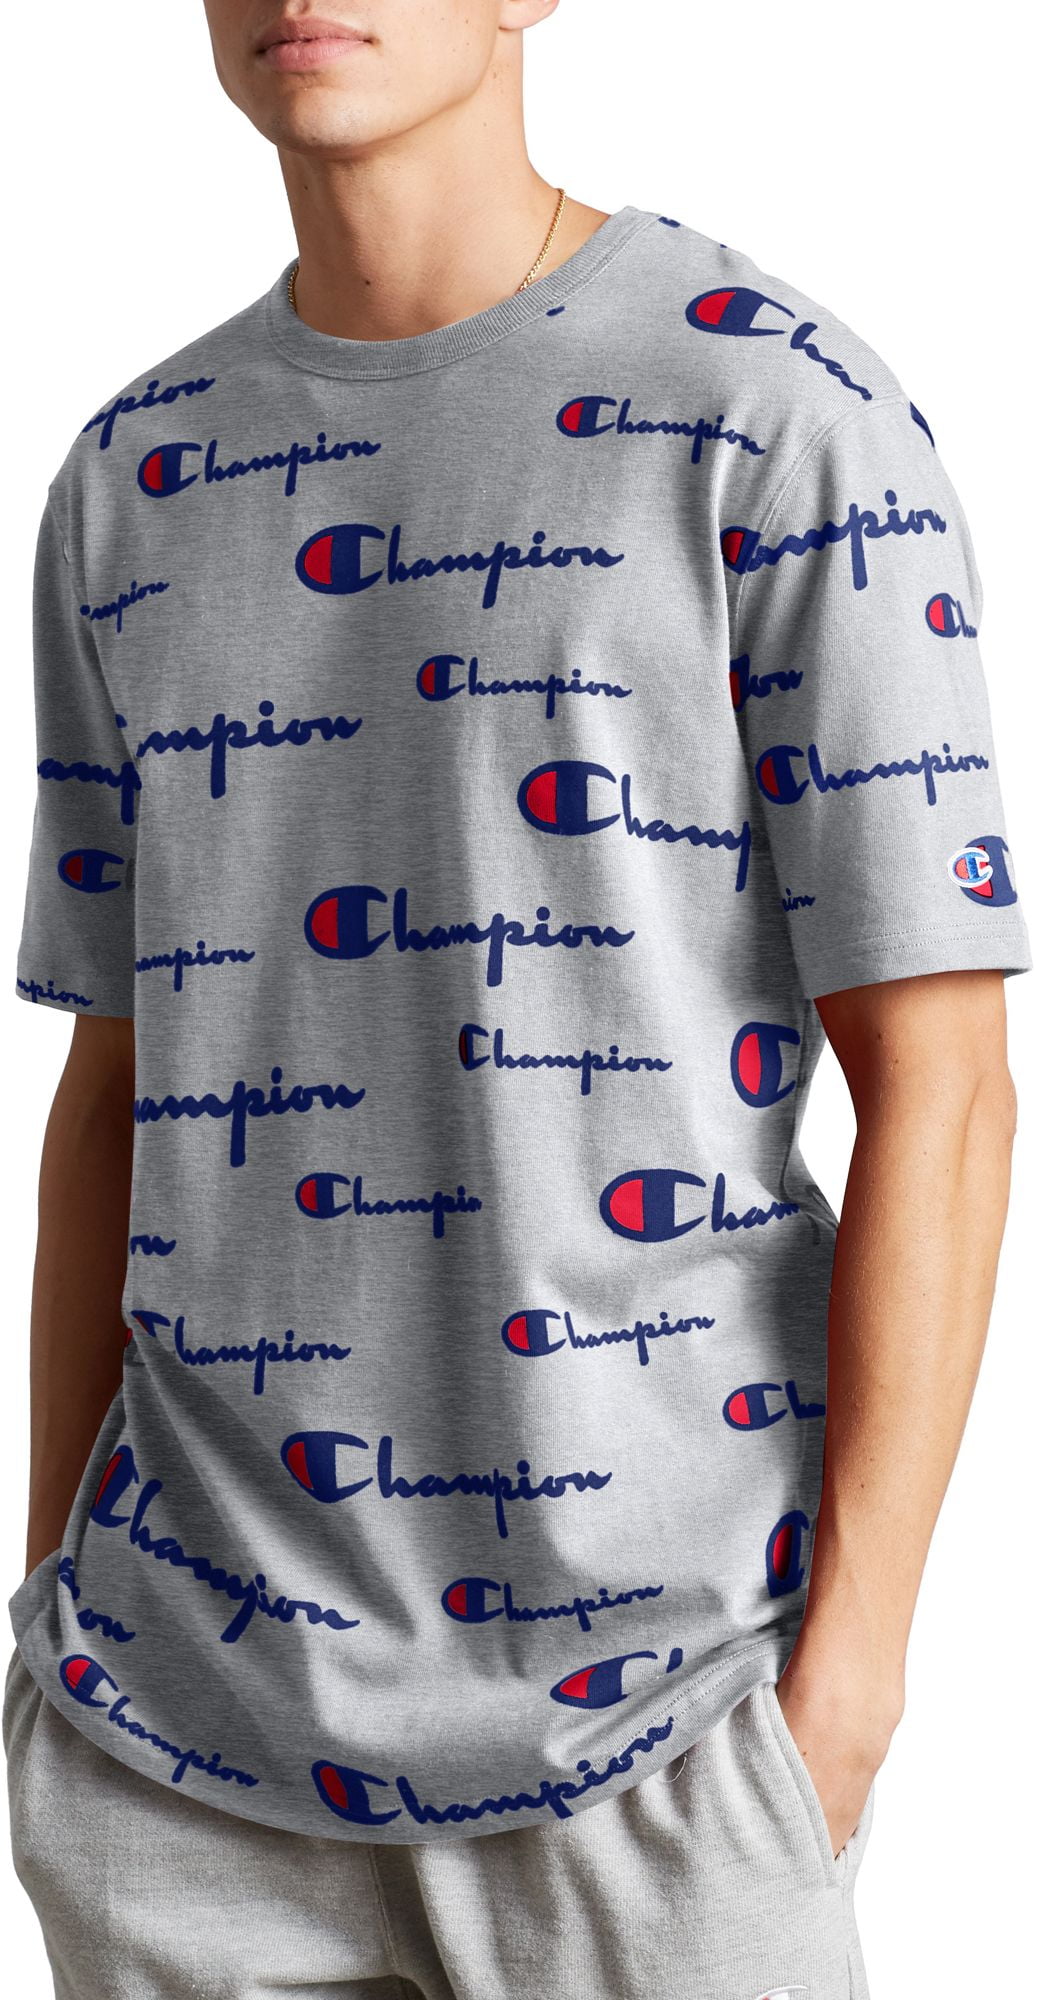 Merg Betasten douche Champion Life Men's Allover Logo Print Heritage T-Shirt - Walmart.com